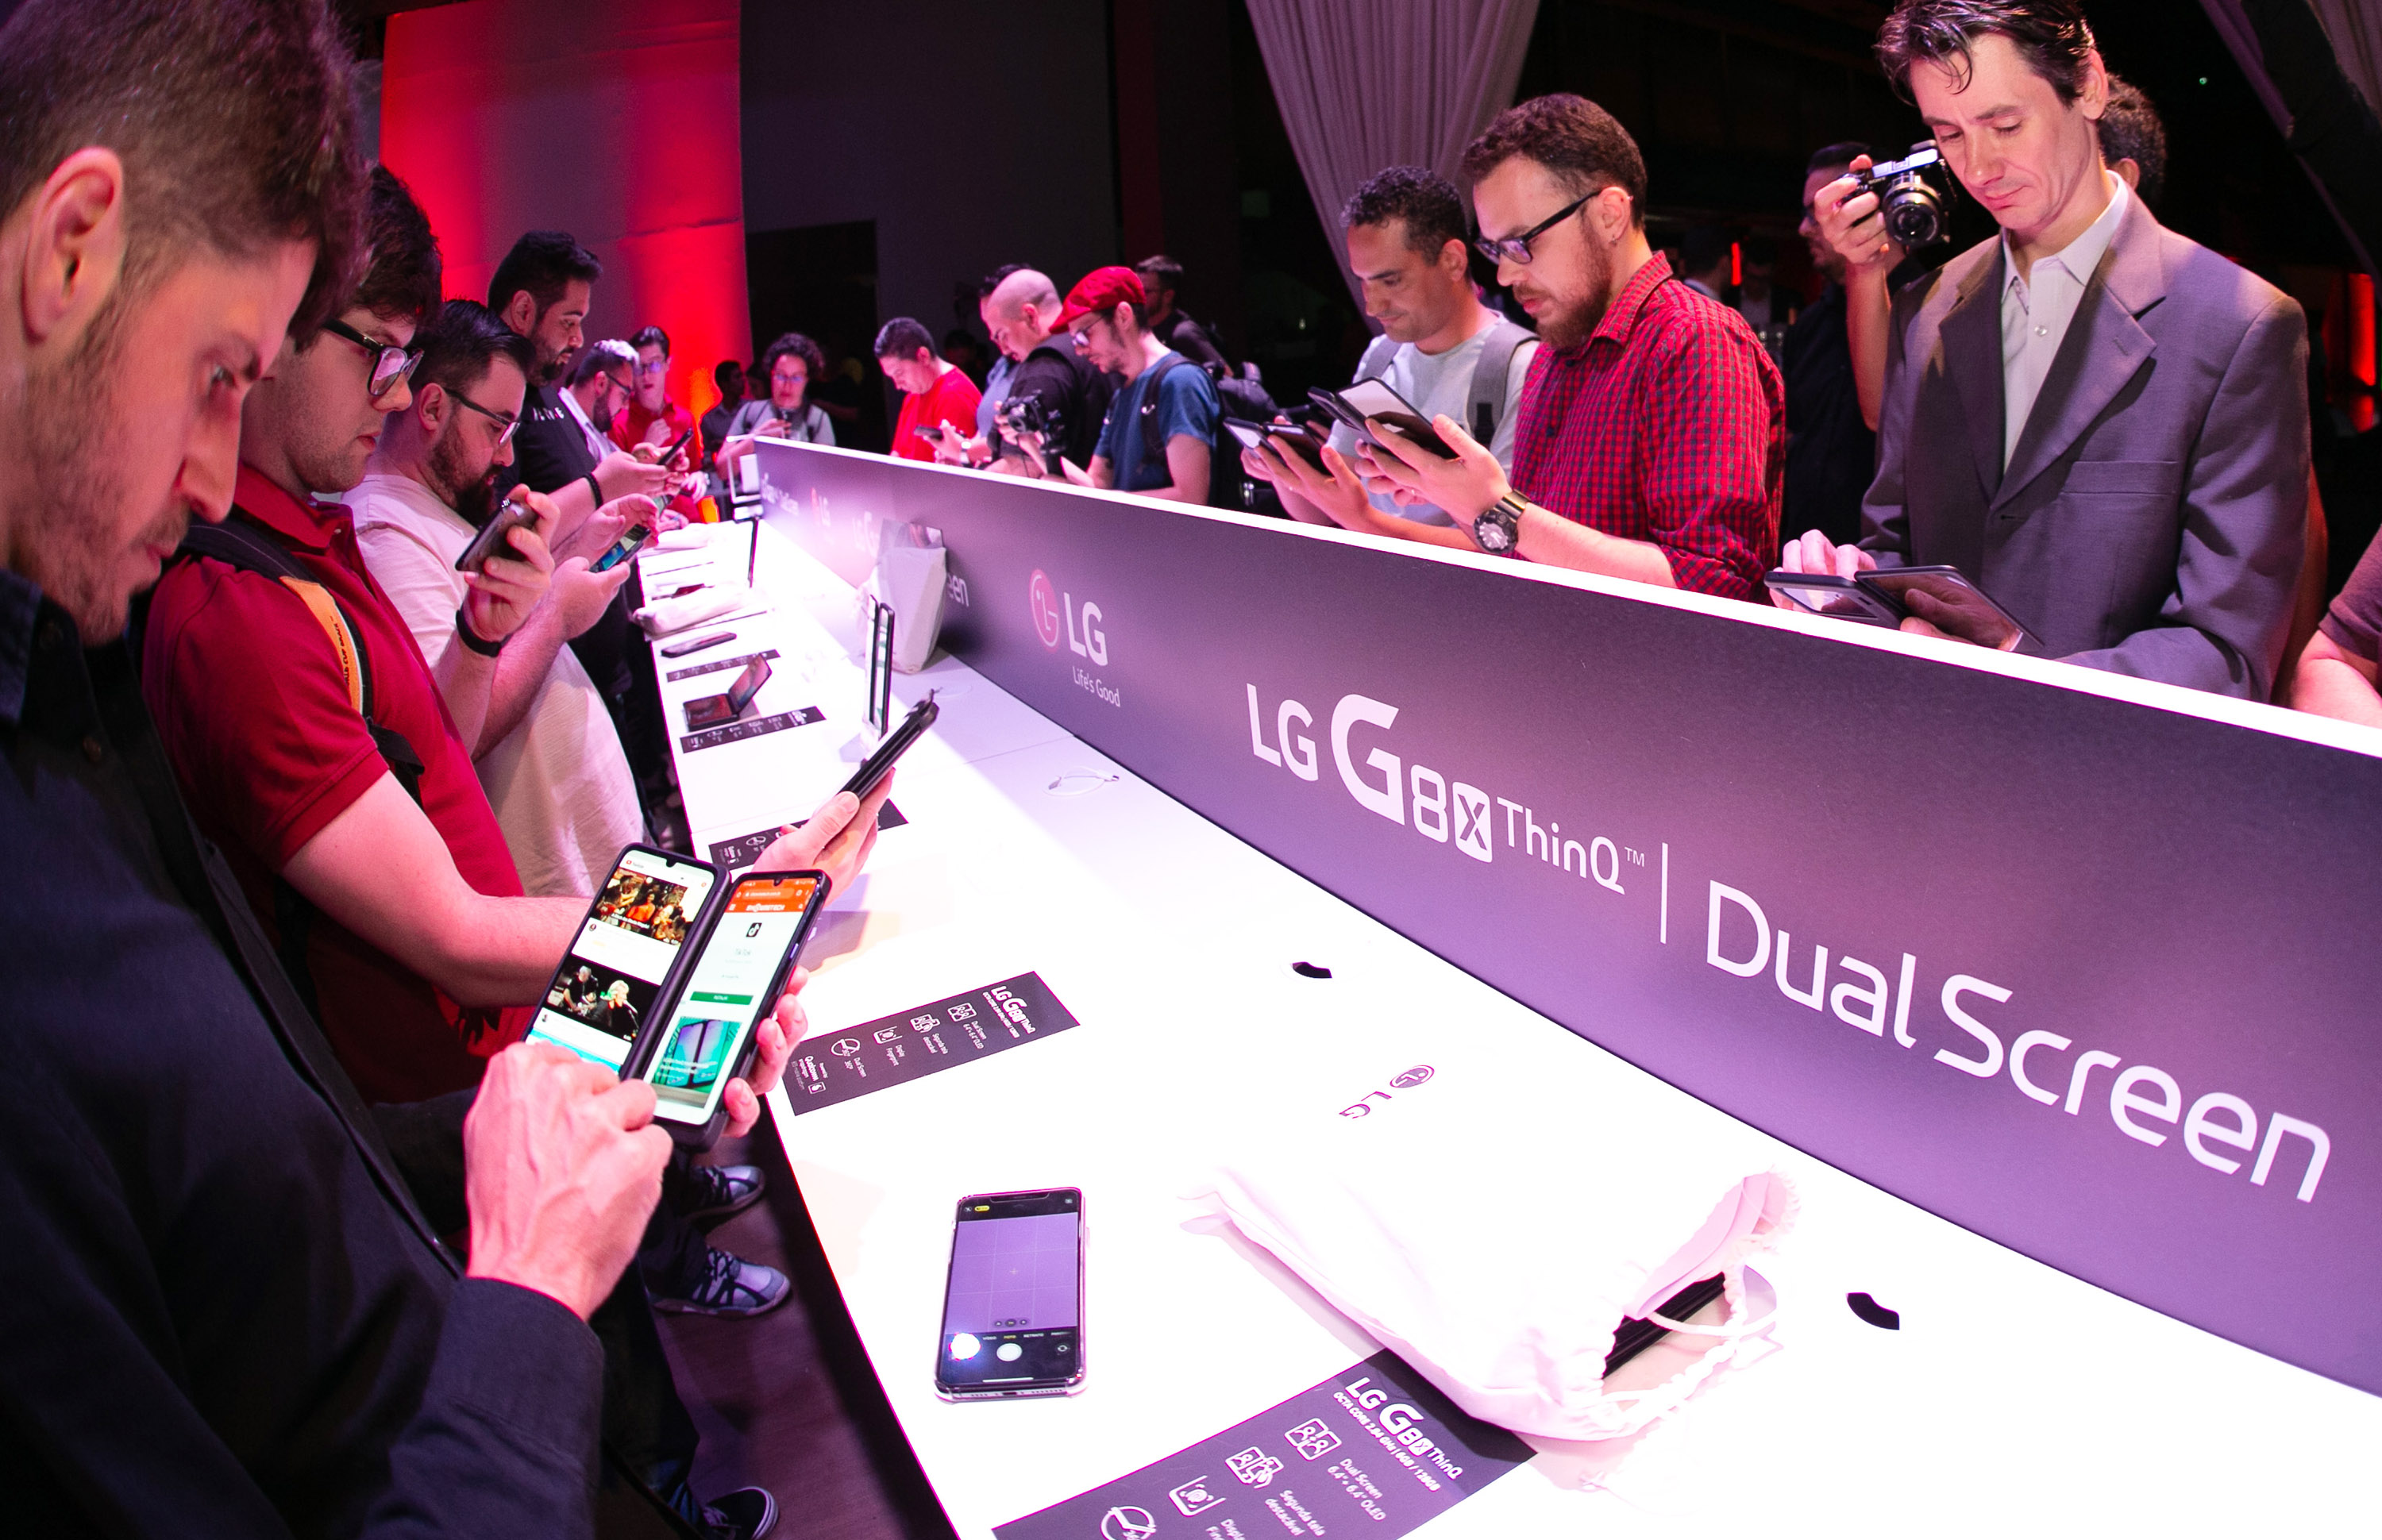 LG전자가 현지시간 21일 브라질 상파울루에서 현지 언론과 거래선들을 대상으로 LG G8X ThinQ 론칭행사를 열었다. 행사에 참석한 사람들이 LG G8X ThinQ를 체험하고 있다.